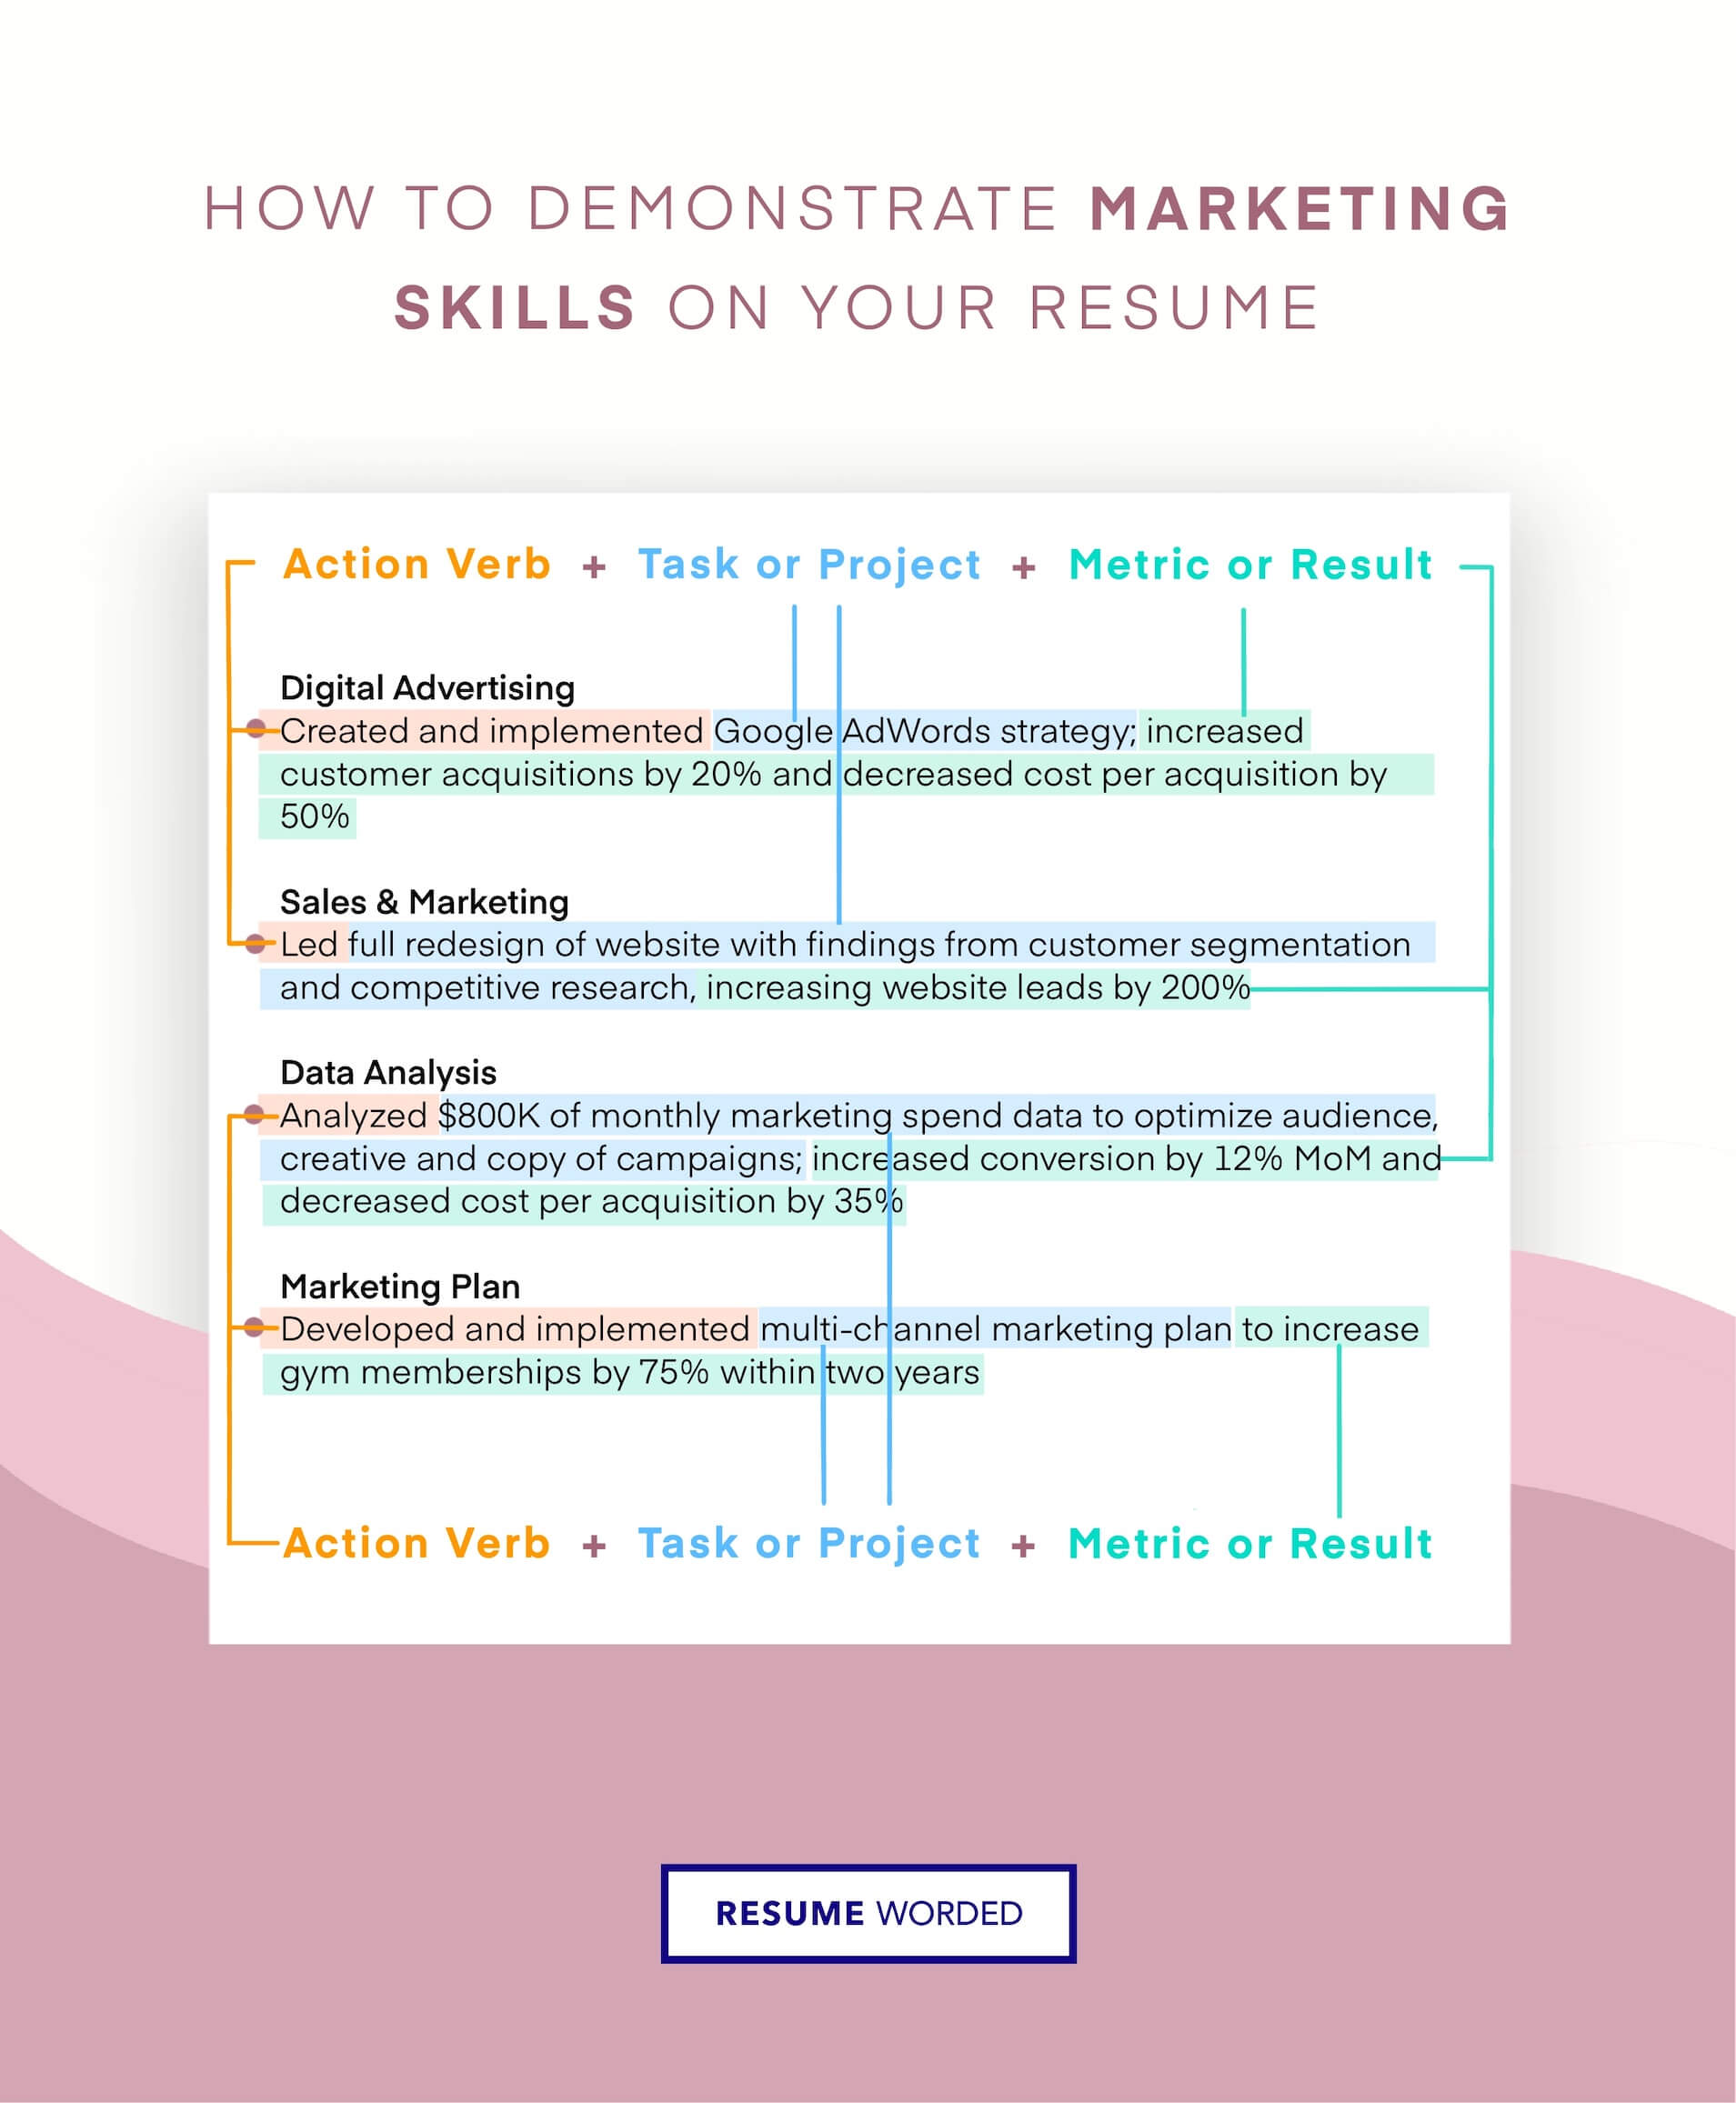 Illustrate your marketing knowledge - Marketing Data Analyst CV